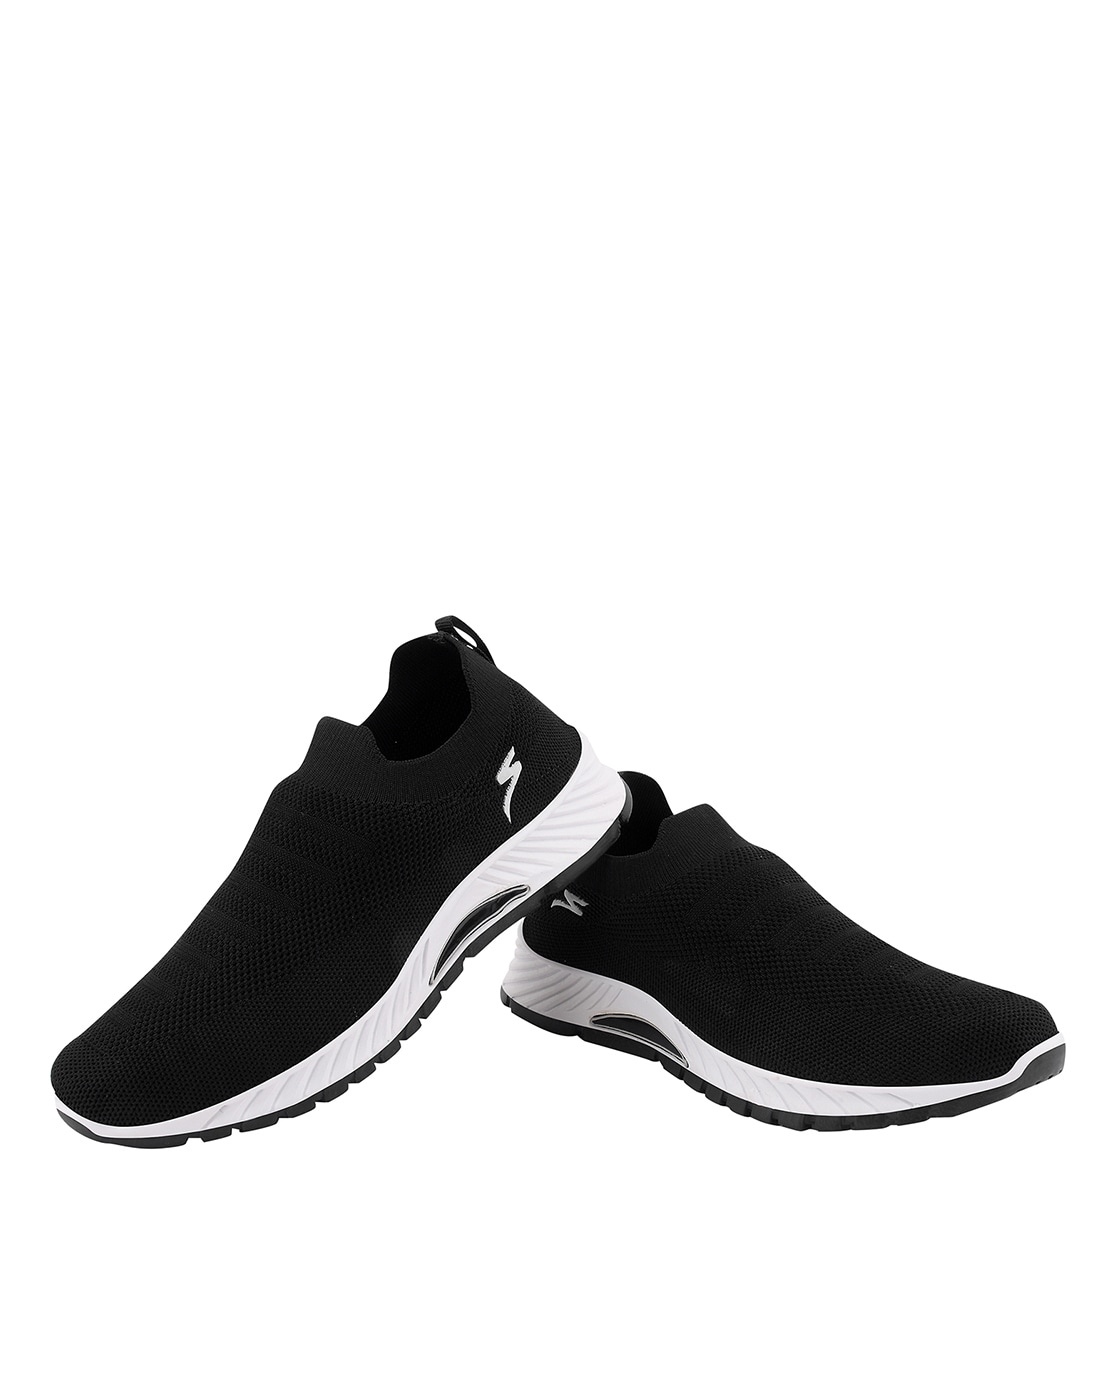 Buy Women Blue Casual Sneakers Online | SKU: 328-1116-17-37-Metro Shoes